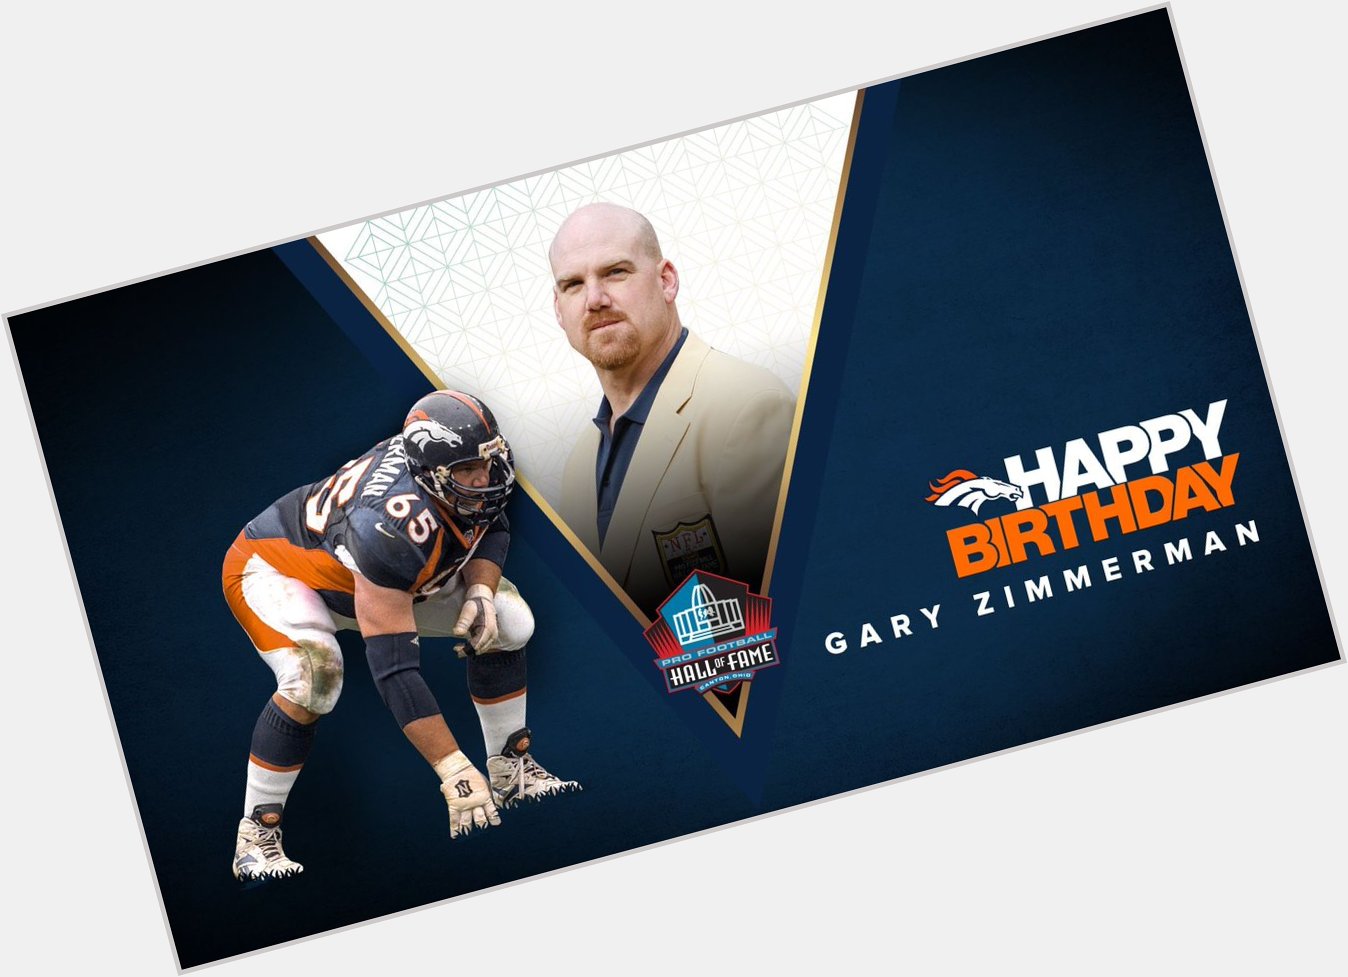 To help us wish OT Gary Zimmerman a happy birthday! 